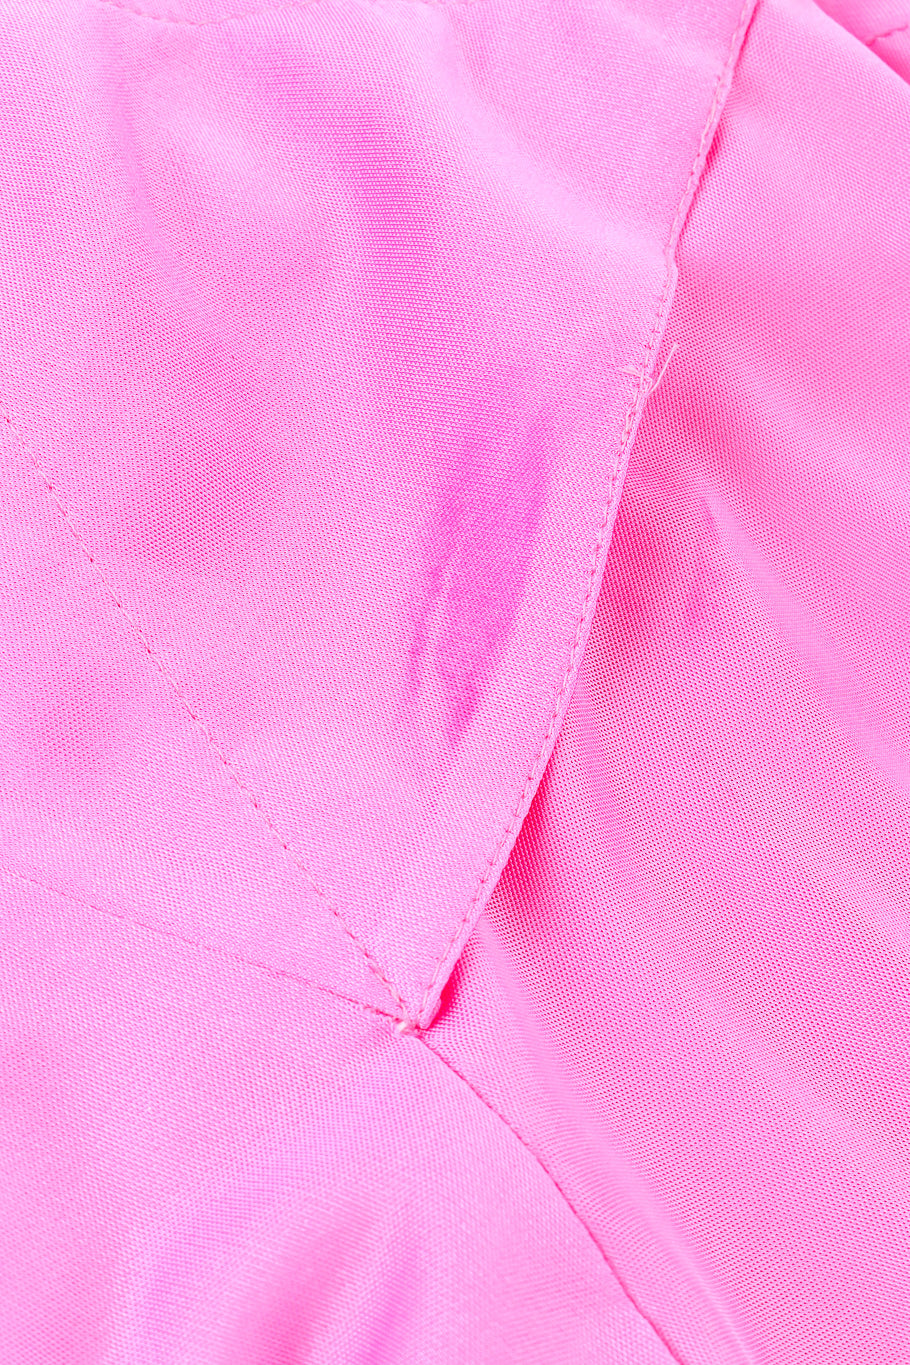 Versace Ruche One-Shoulder Dress stain on lining closeup @Recessla